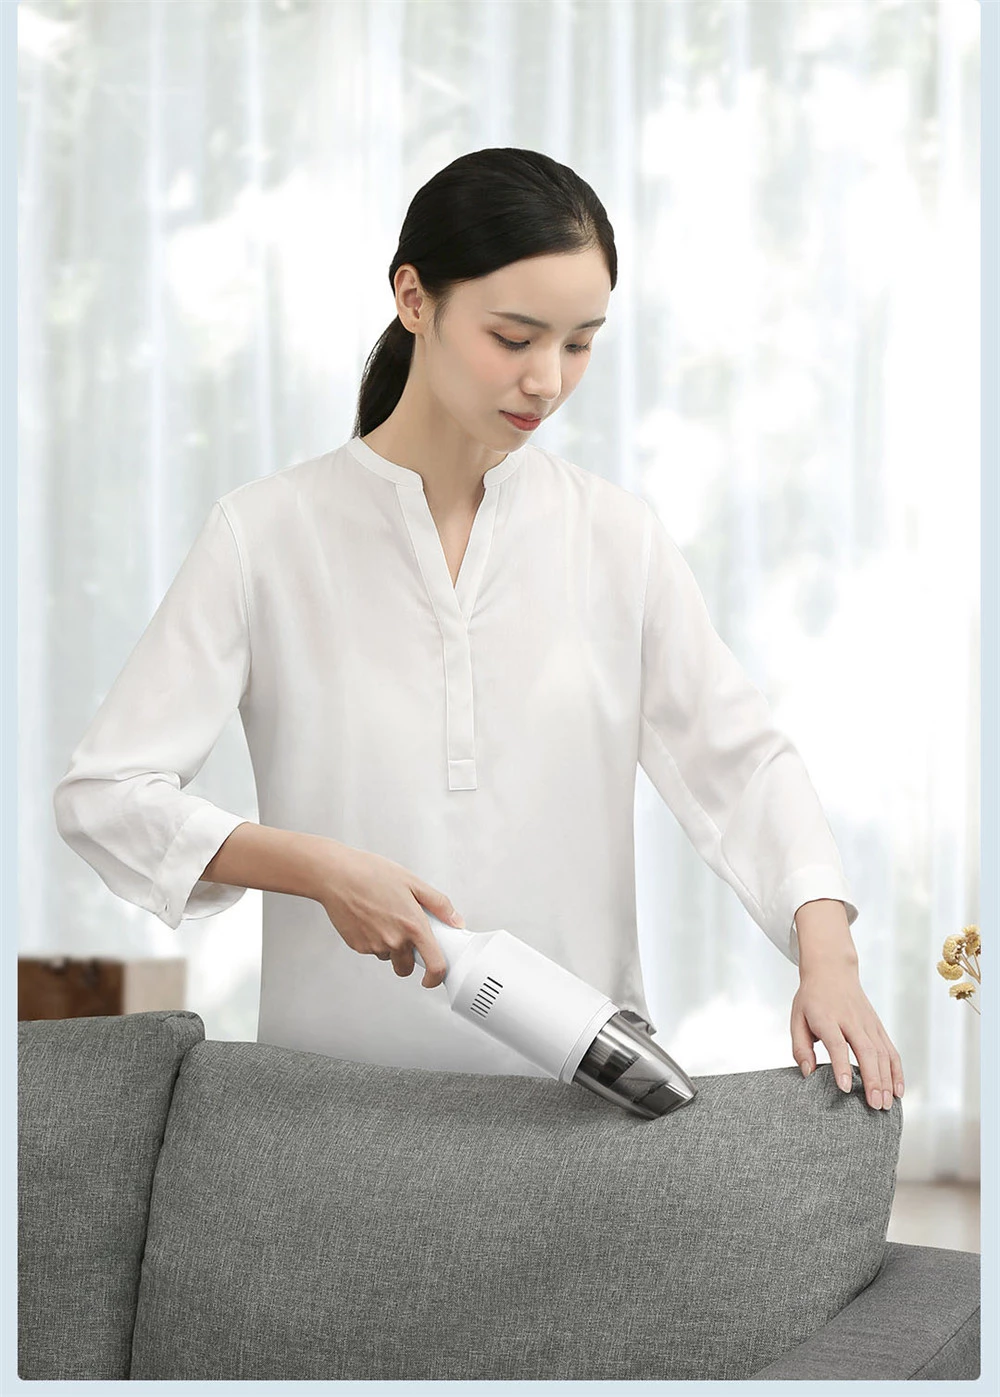 Xiaomi Z1 Portable Wireless Handheld Multi-purpose Vacuum Cleaner